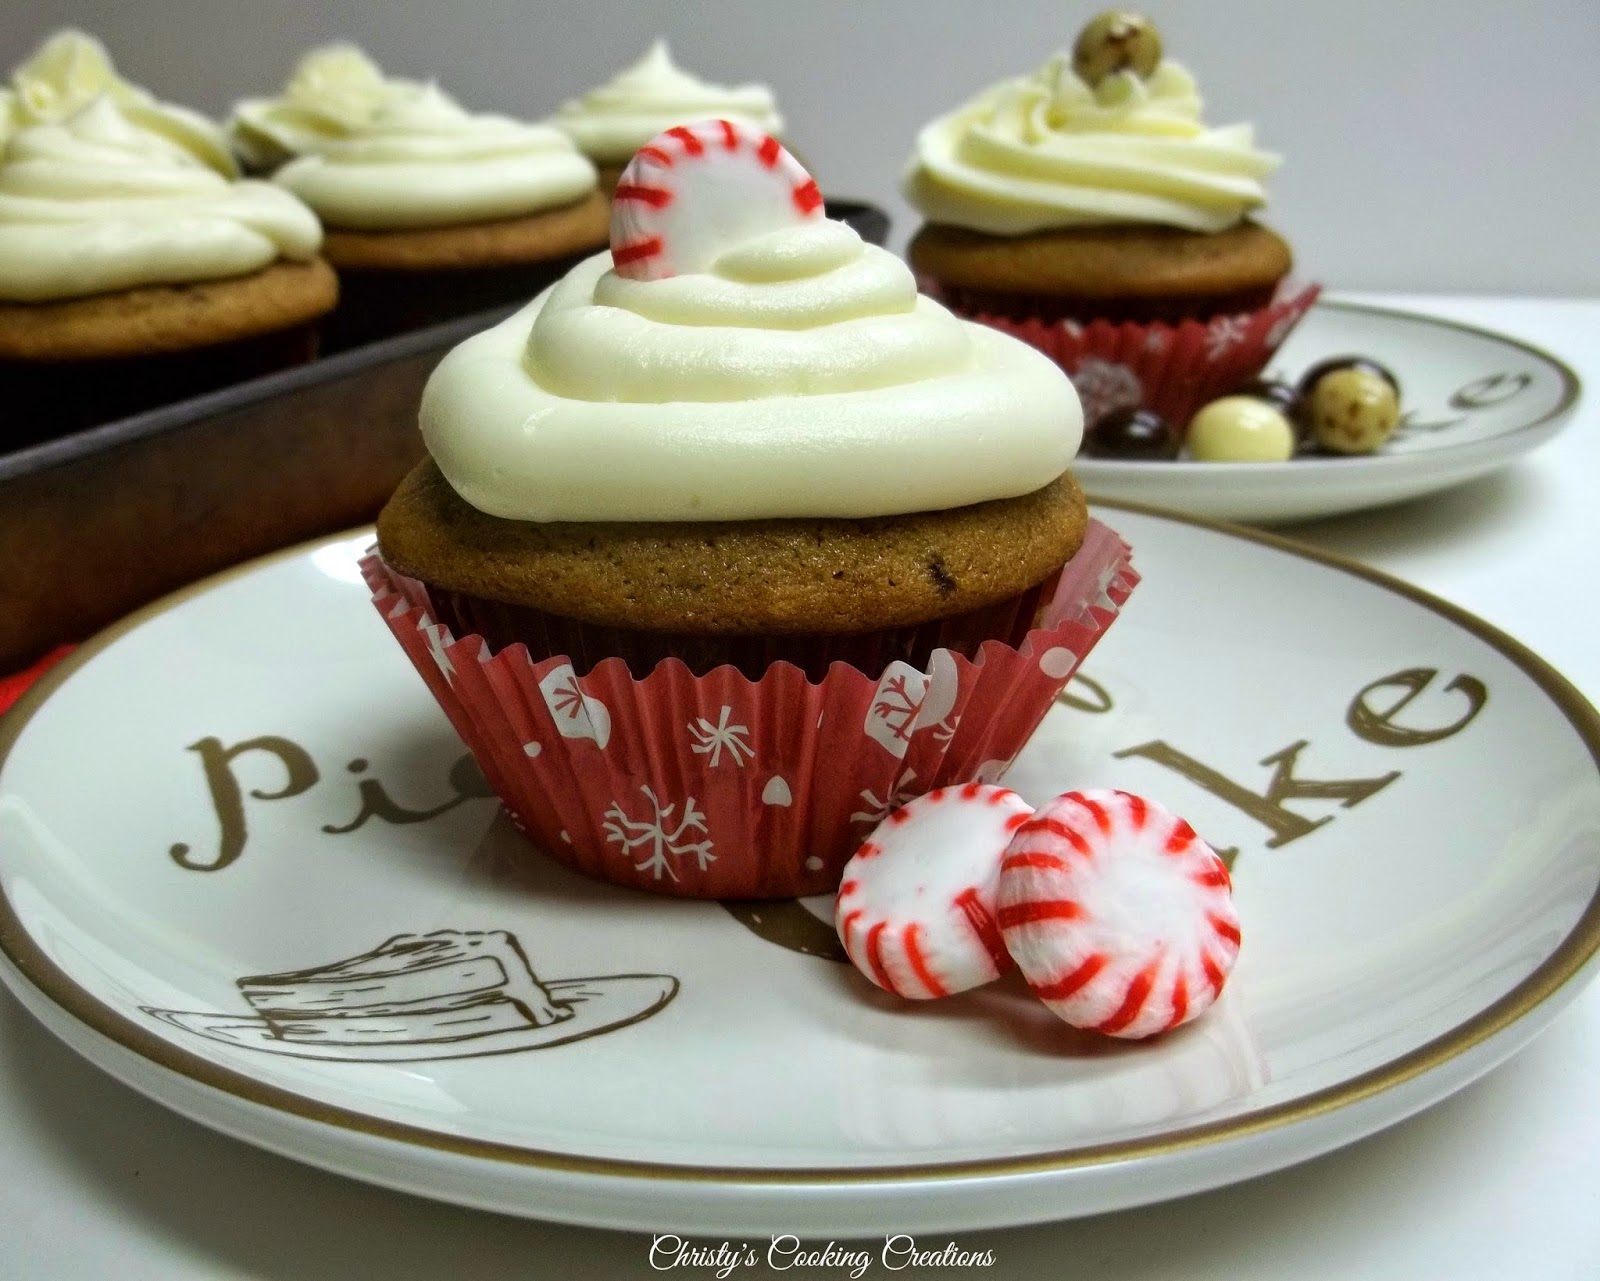 White Chocolate Mocha Cupcakes